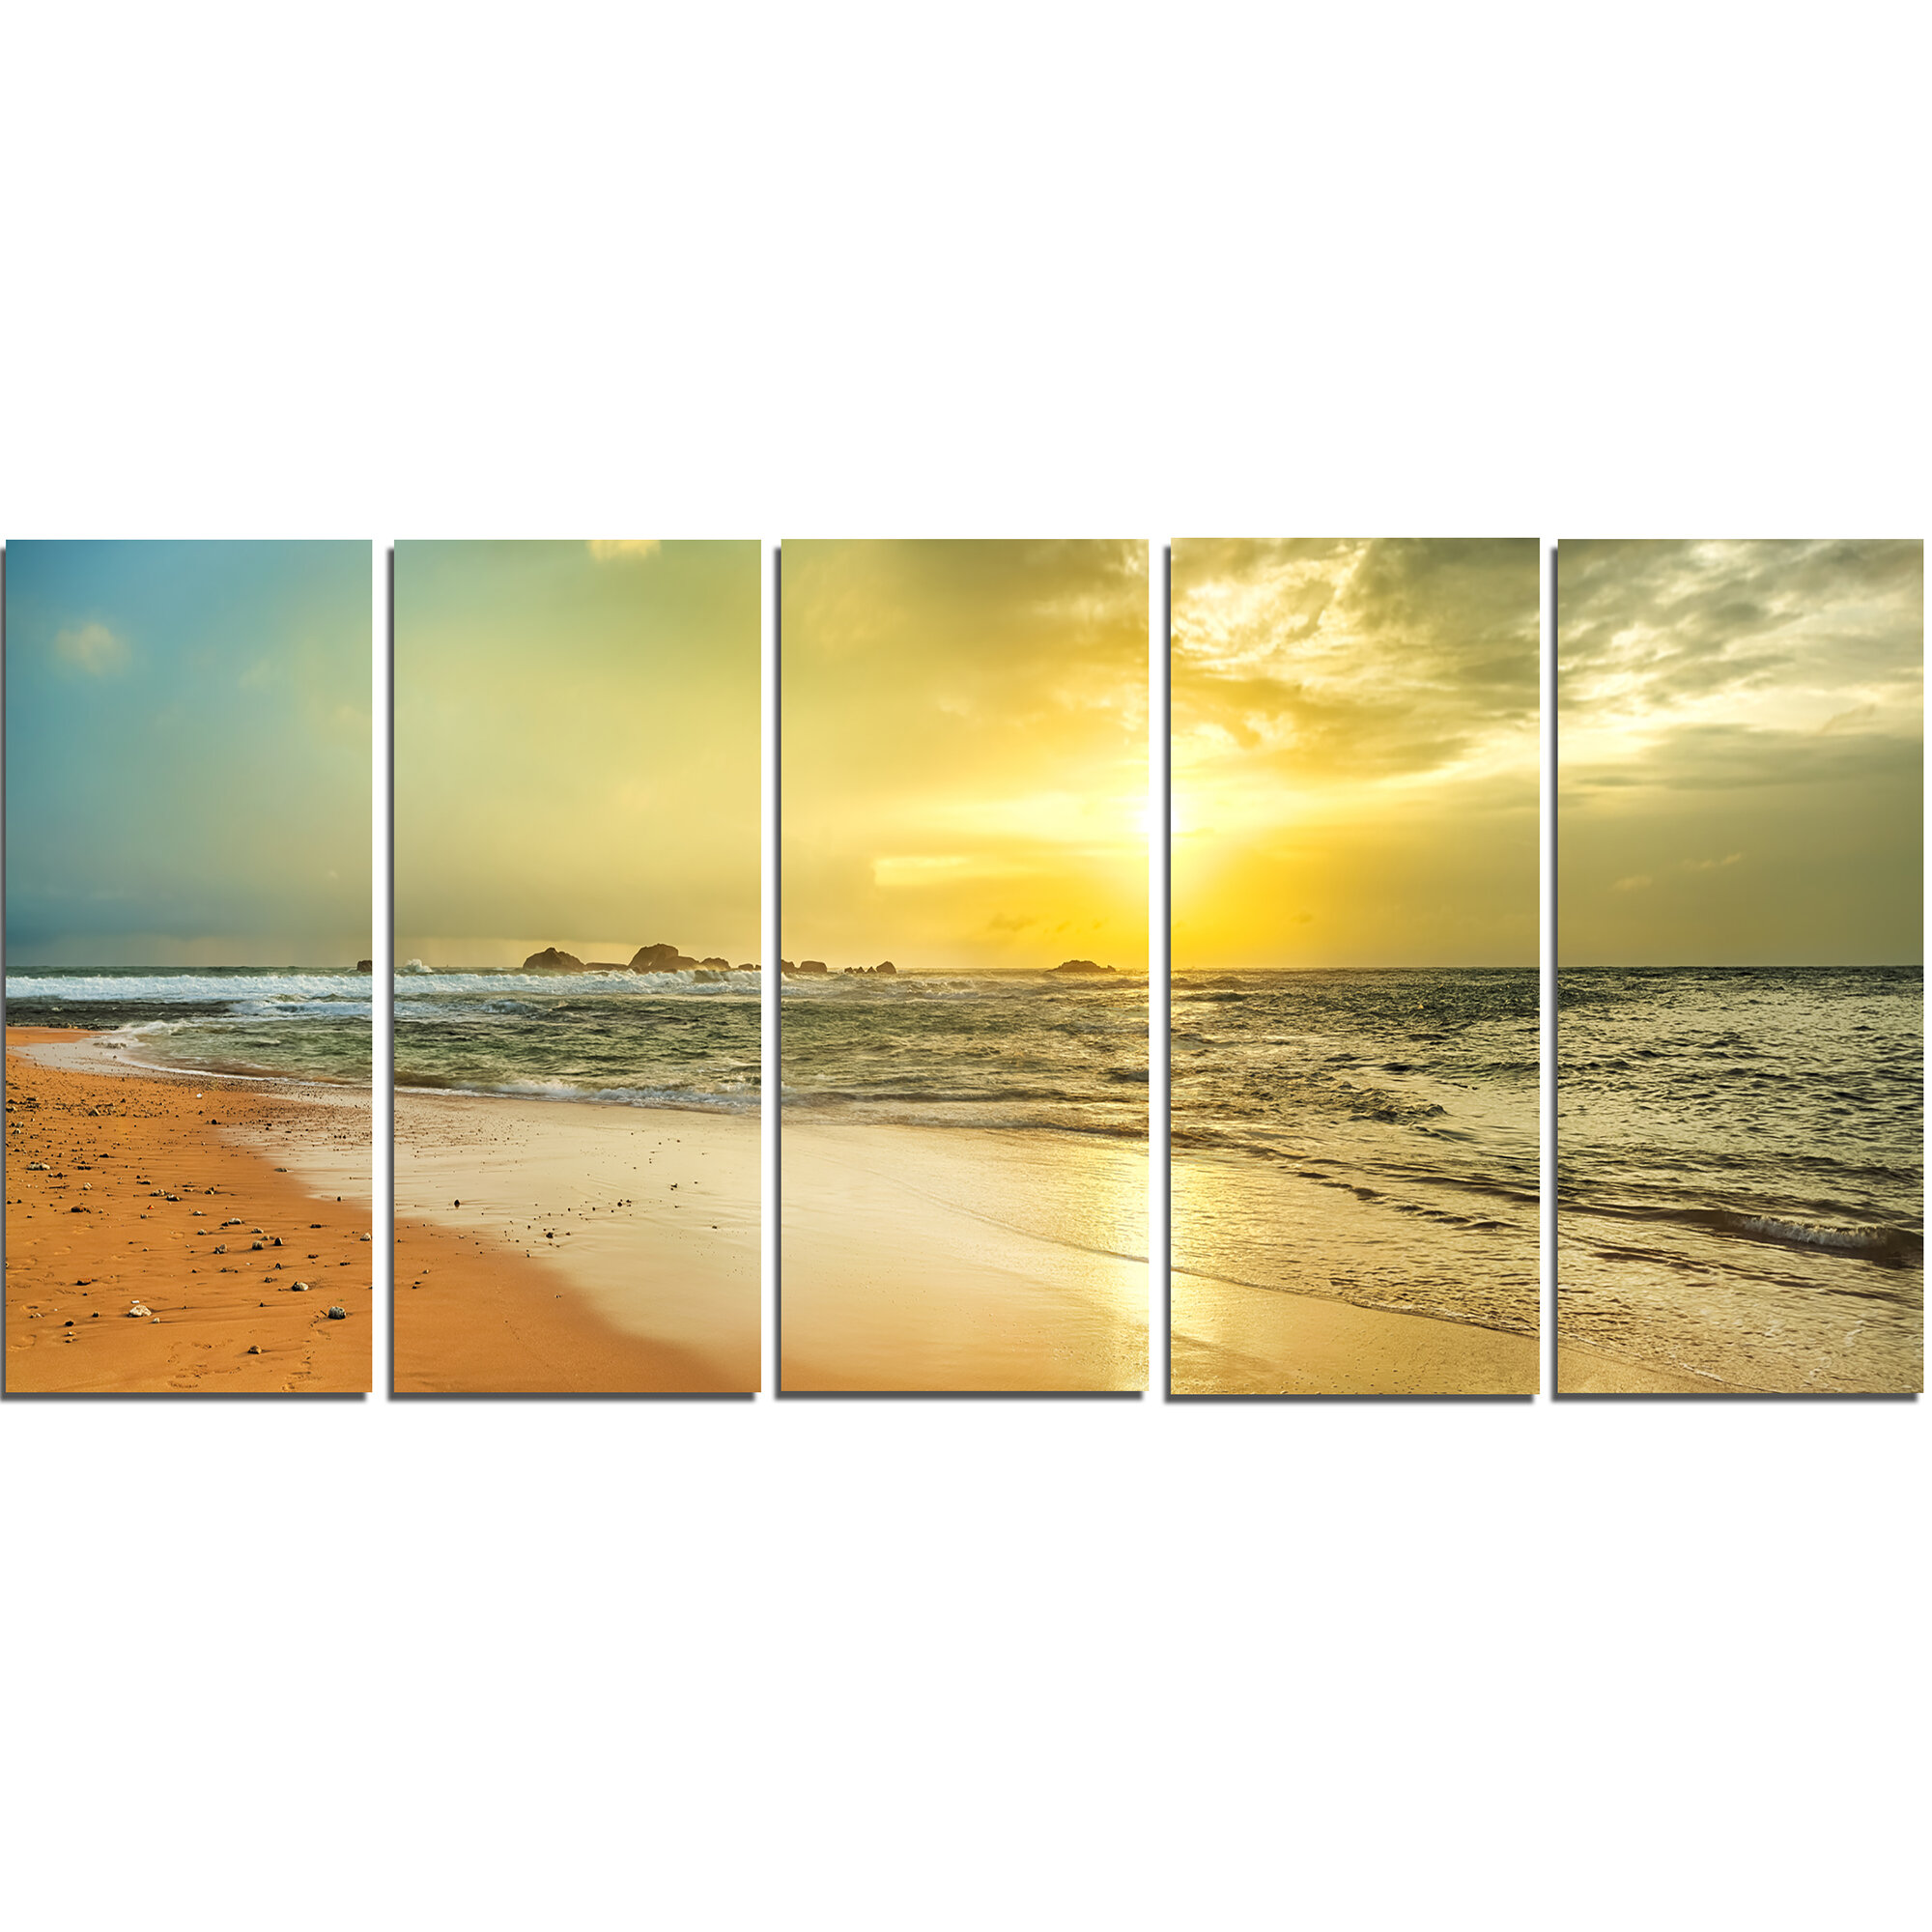 Designart Bright Yellow Sunset Beach Panorama 5 Piece Wall Art On Wrapped Canvas Set Wayfair